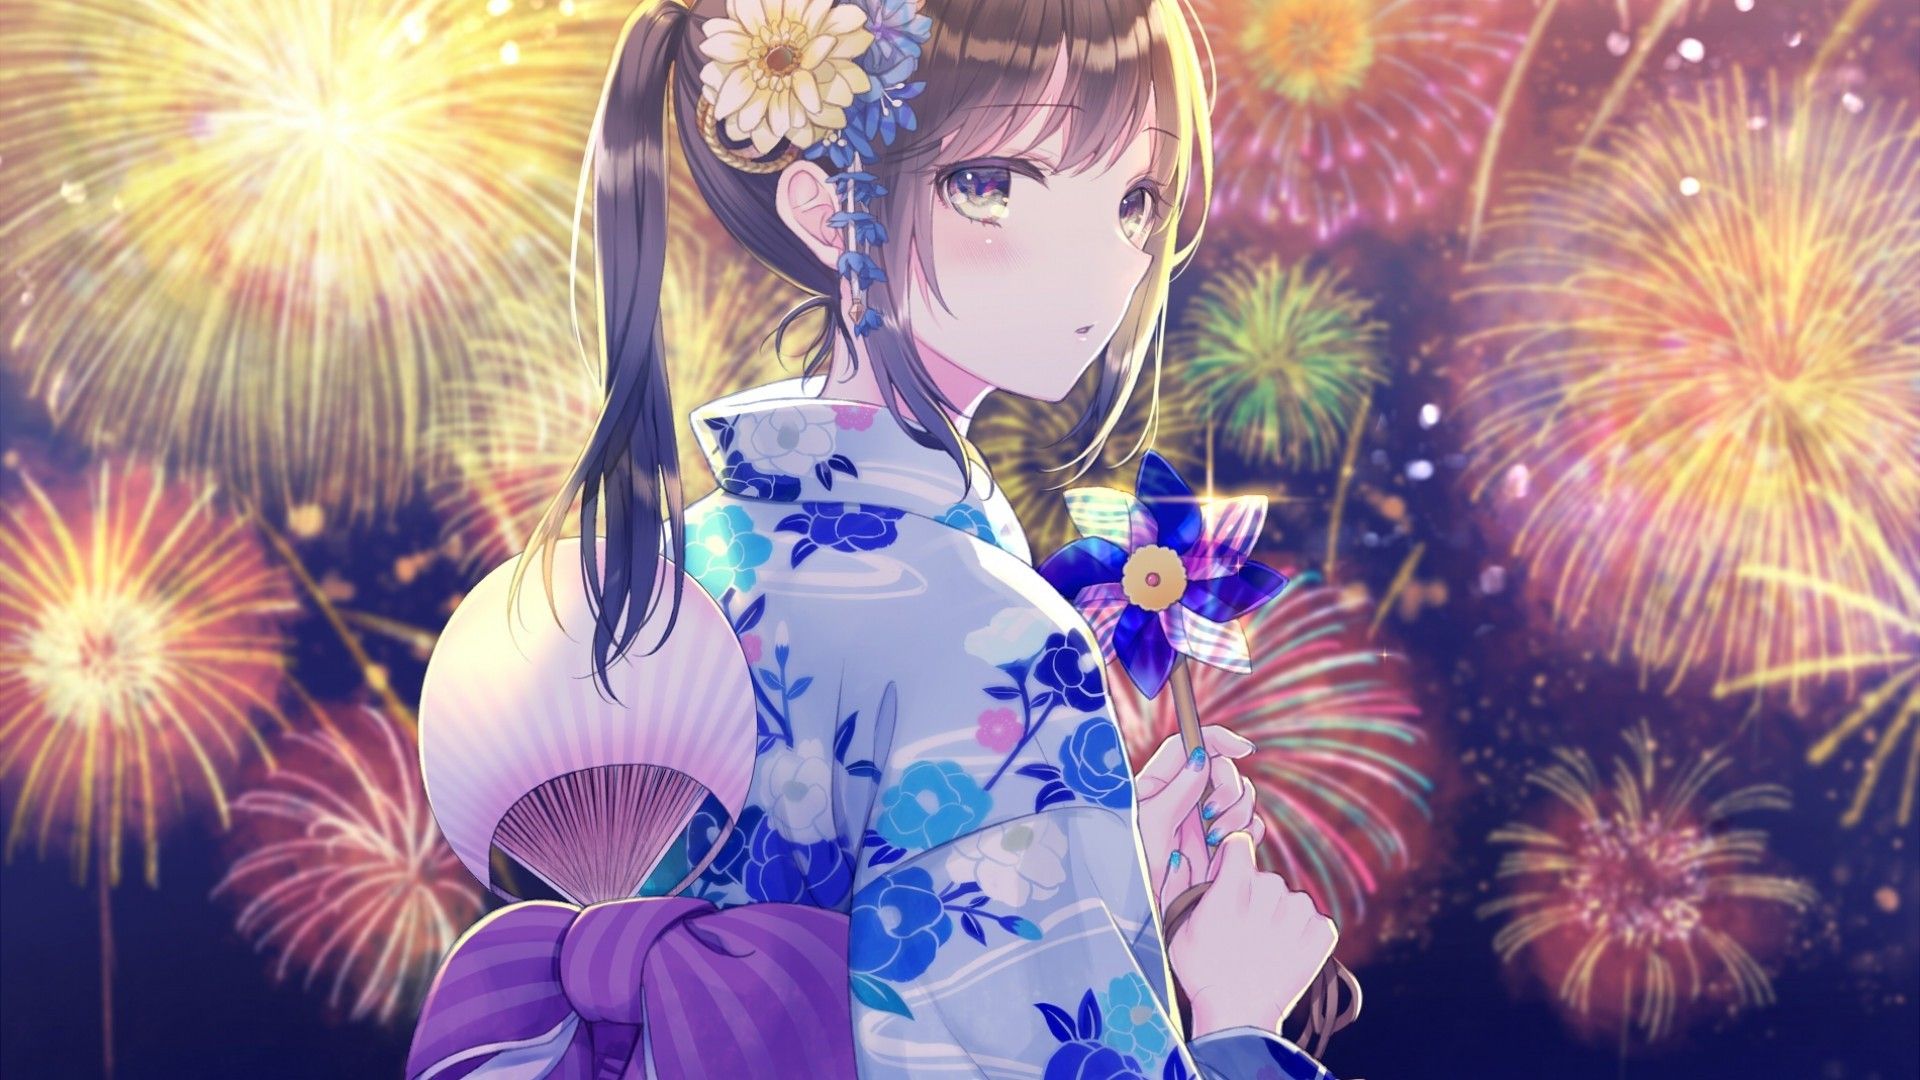 Summer Festival - Other & Anime Background Wallpapers on Desktop Nexus  (Image 1829245)